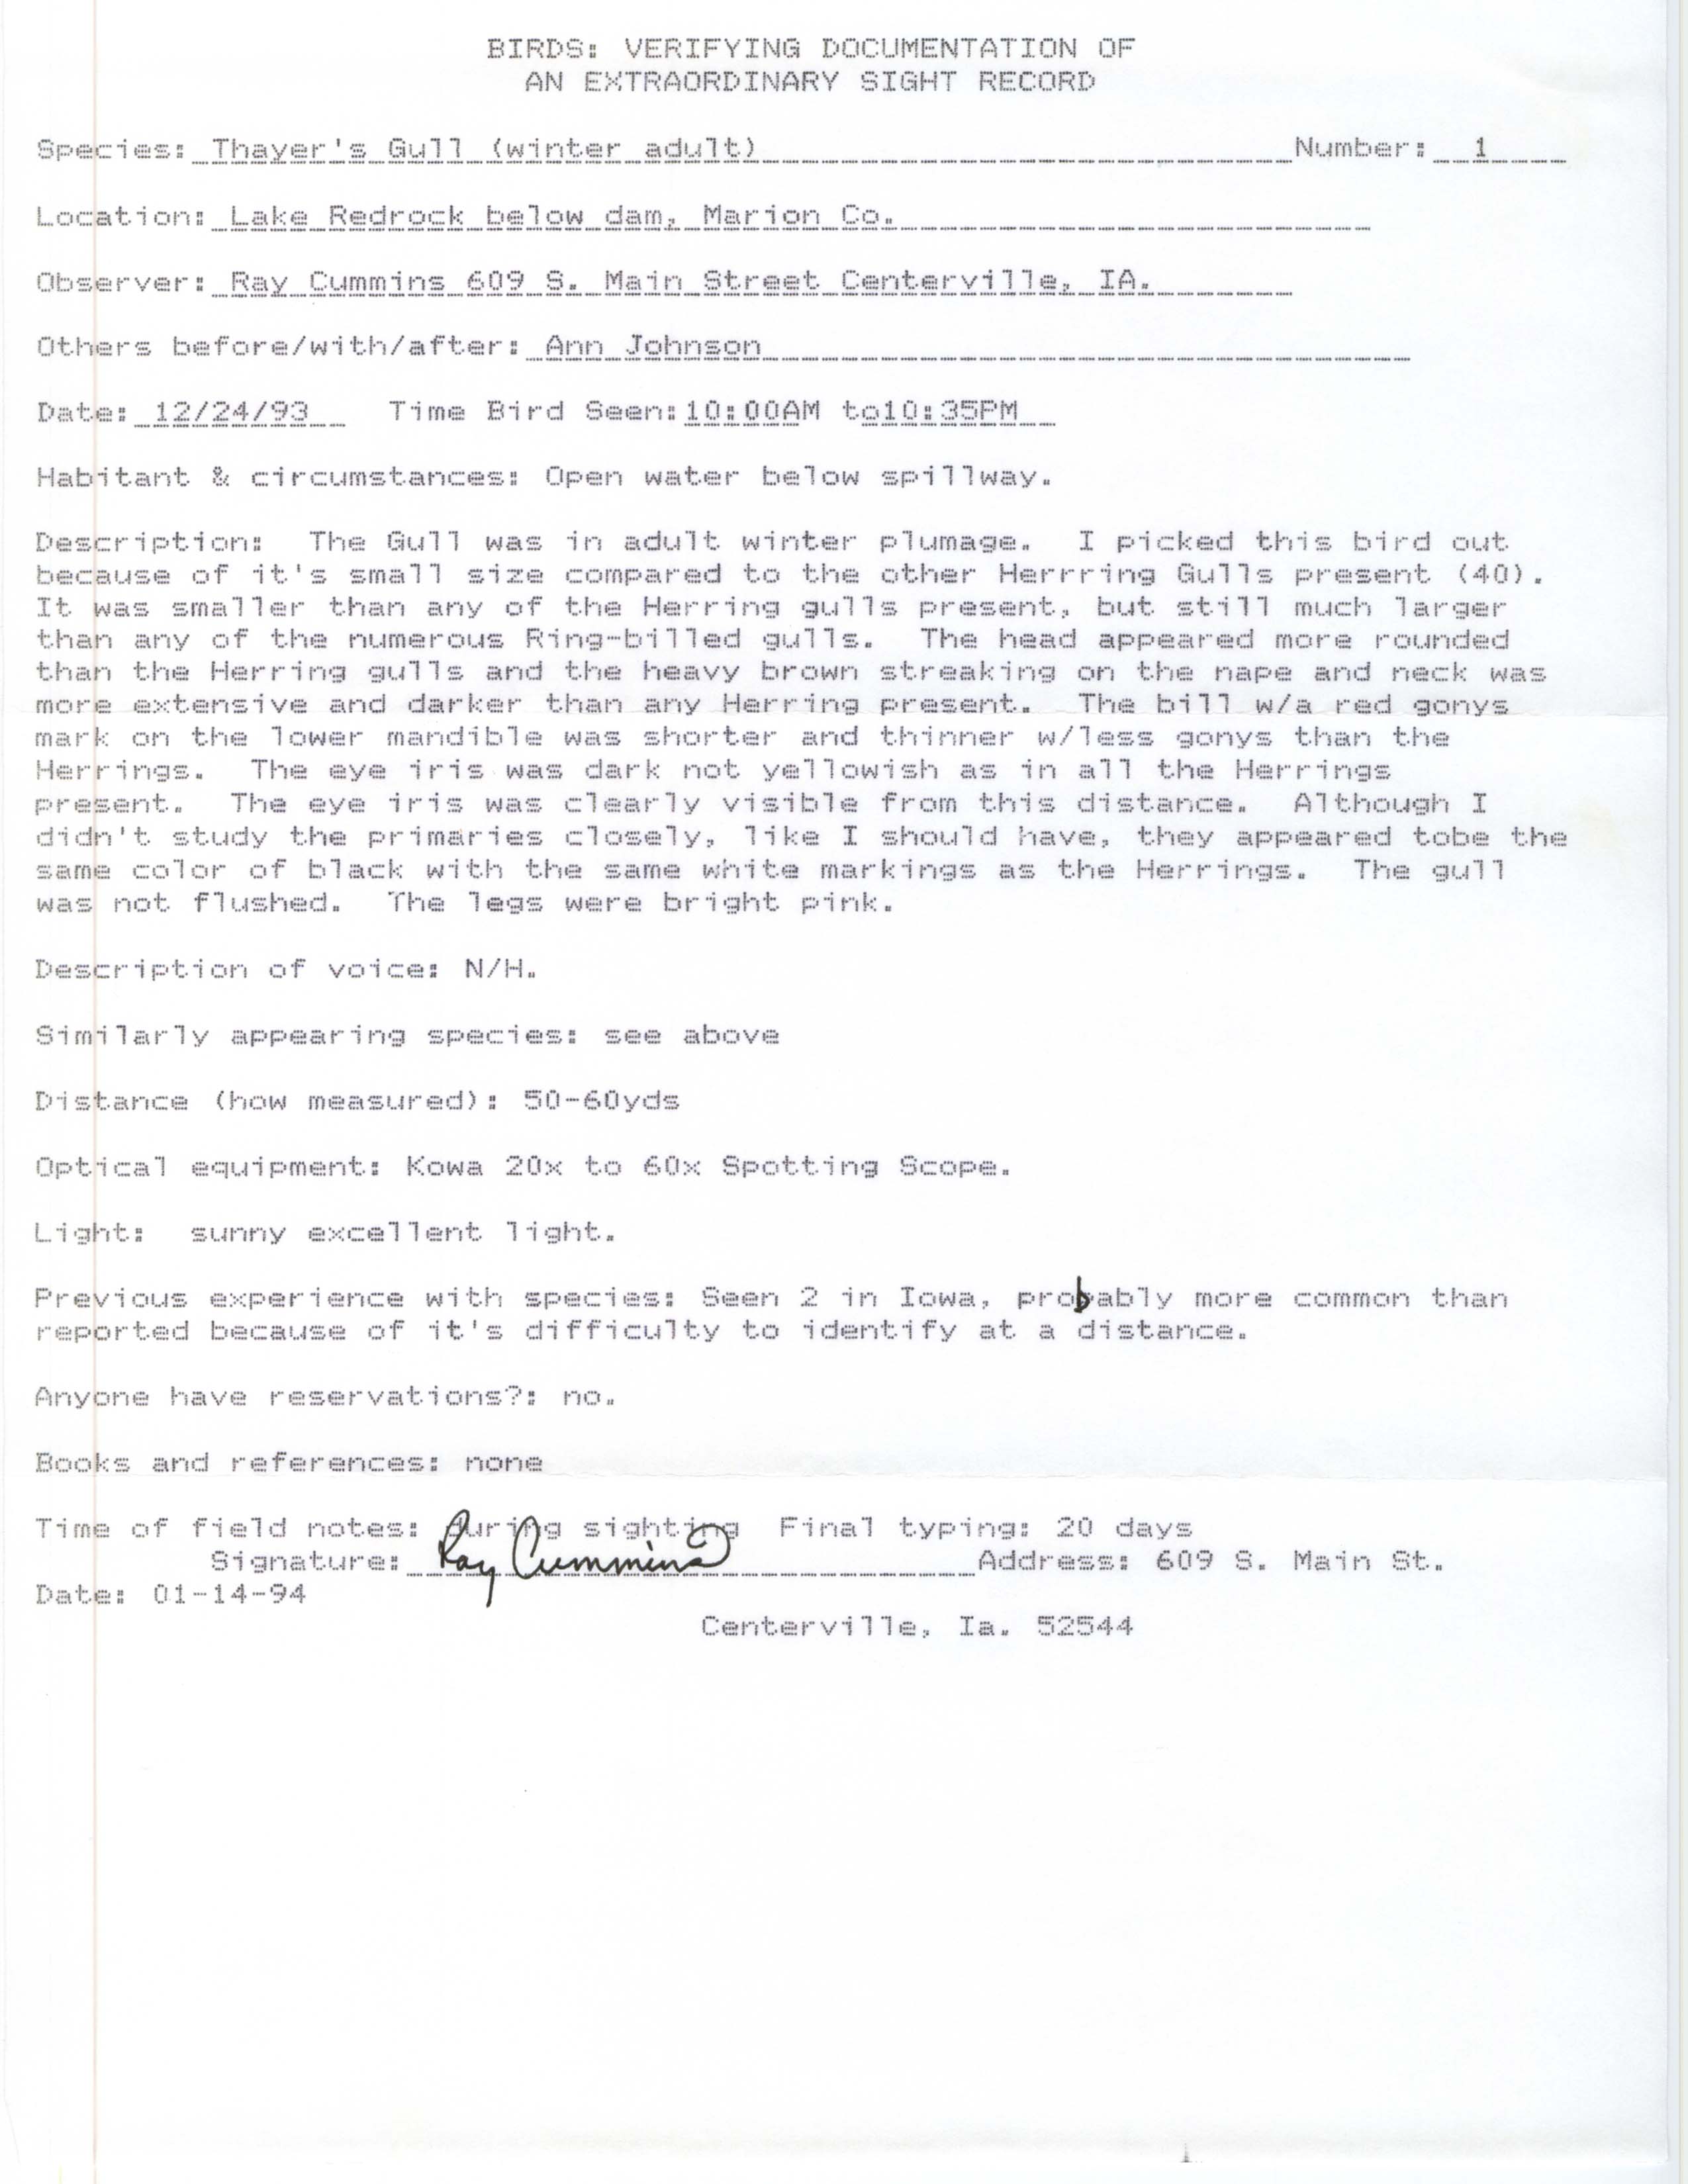 Rare bird documentation form for Thayer's Gull at Redrock Dam, 1993